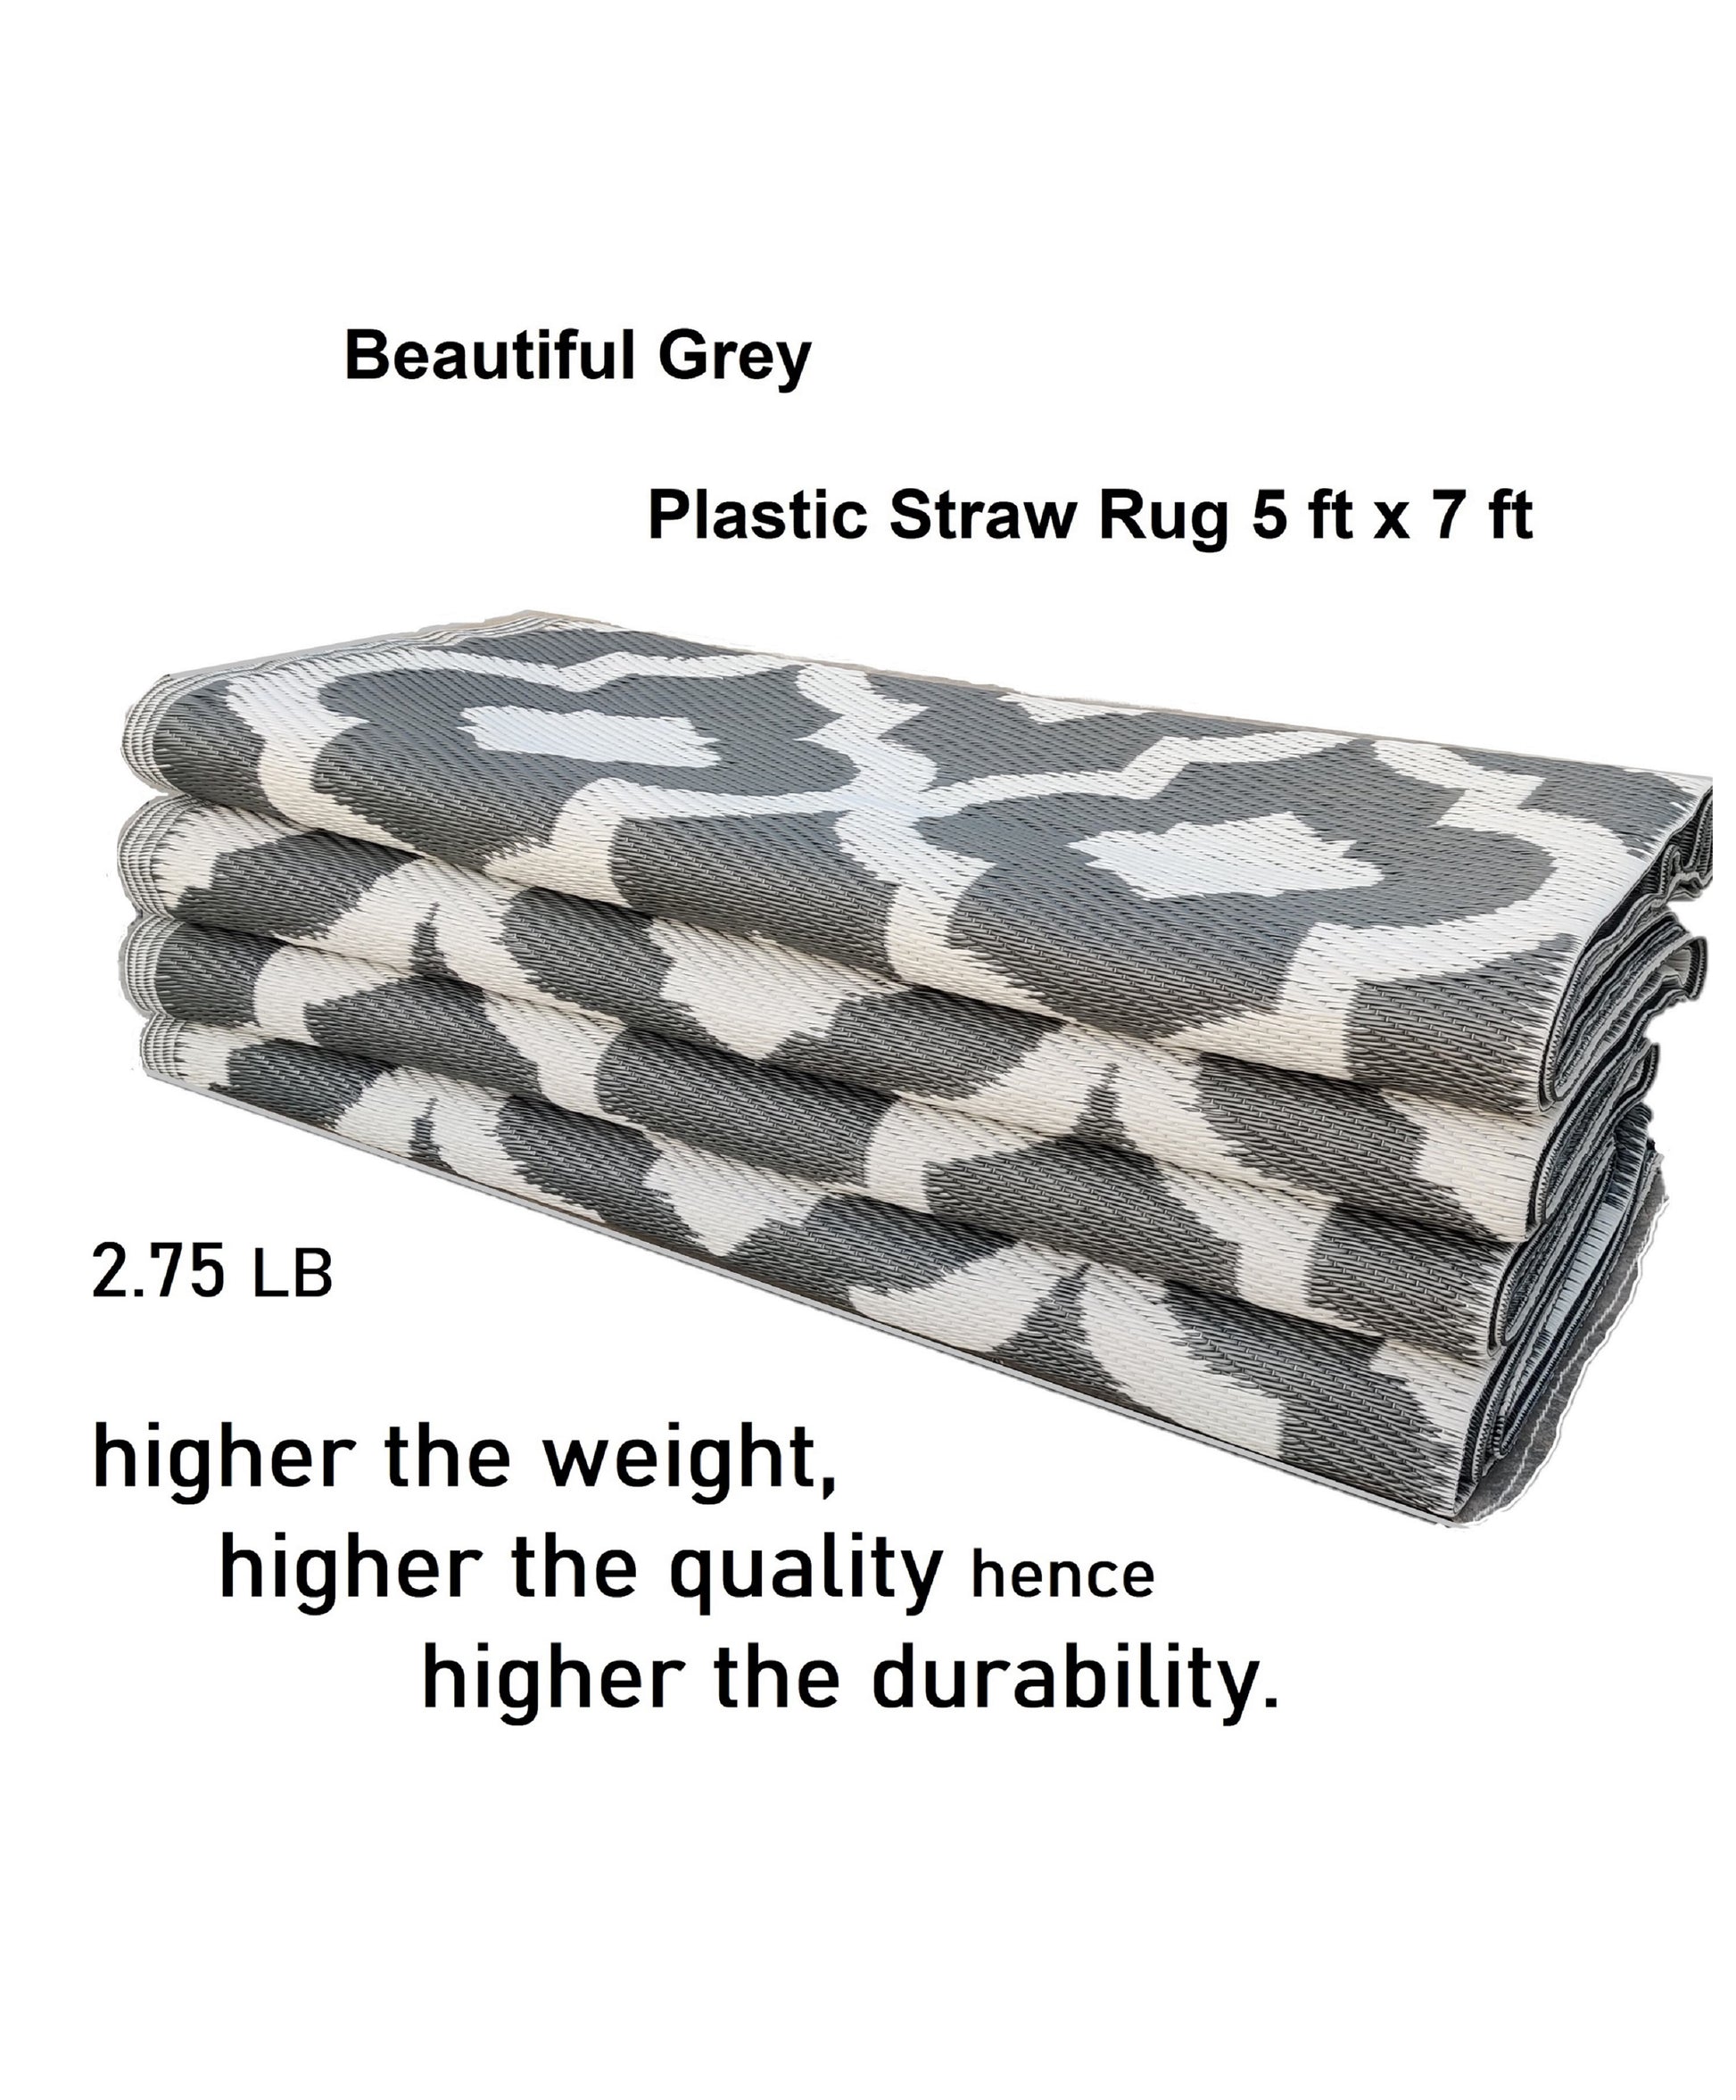 BalajeesUSA Outdoor Plastic Straw Rugs Outdoor Patio Rugs – 5'x7' Black & White 507